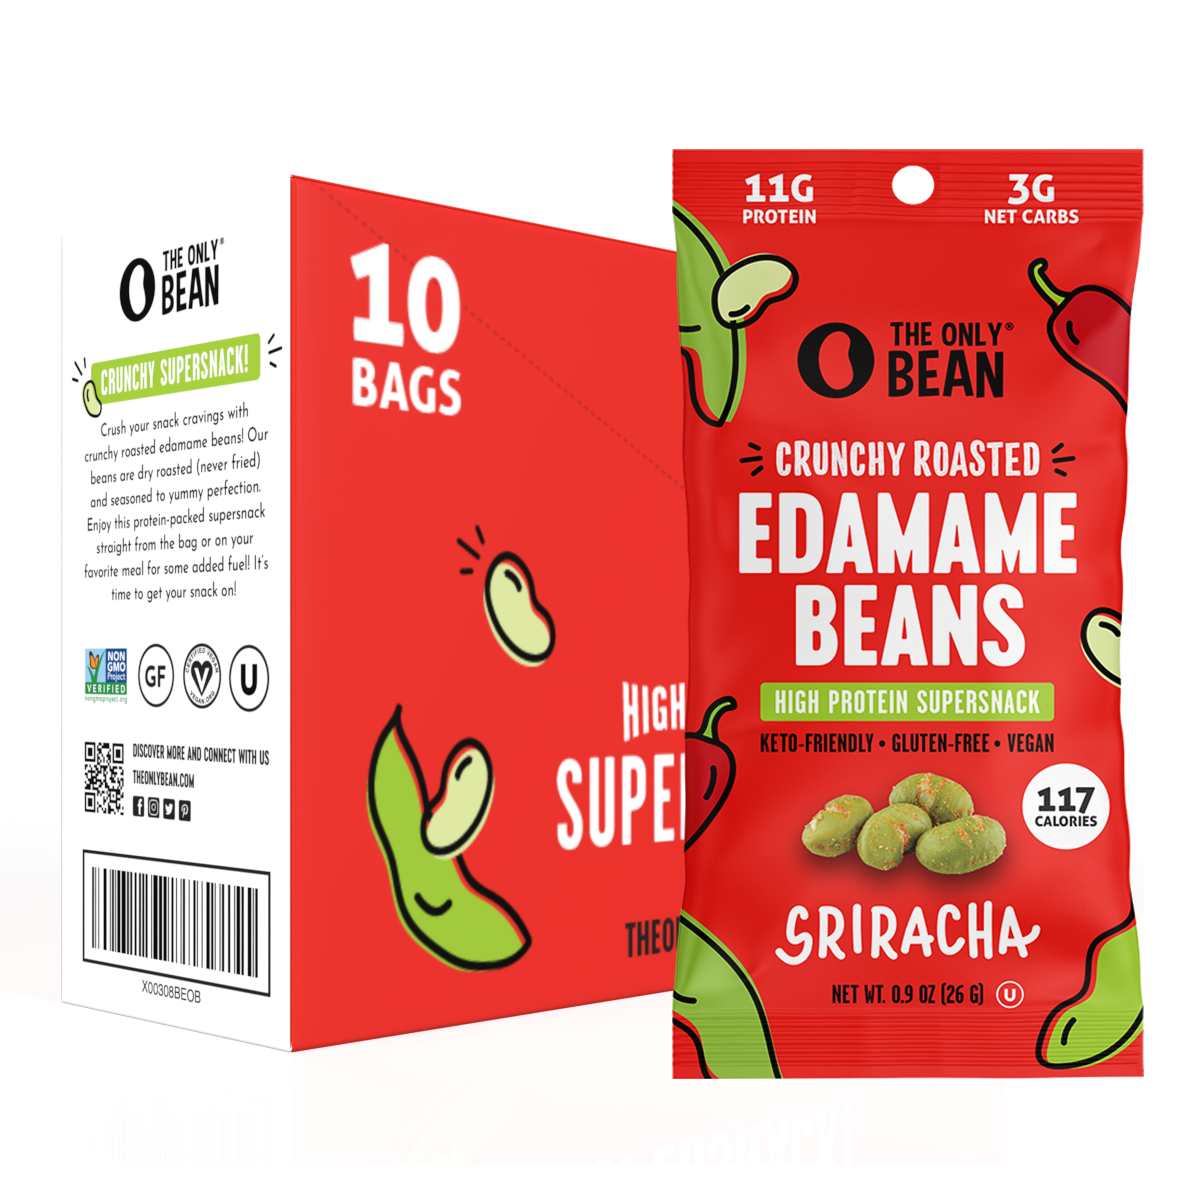 Crunchy Roasted Edamame Beans (Sriracha) - 117 Calorie Packs, Keto Snacks (3g Net) - High Protein Healthy Snacks (11g Protein) - Low Carb & Calorie Gluten-Free Snack, Vegan Keto Food - (10 Pack)